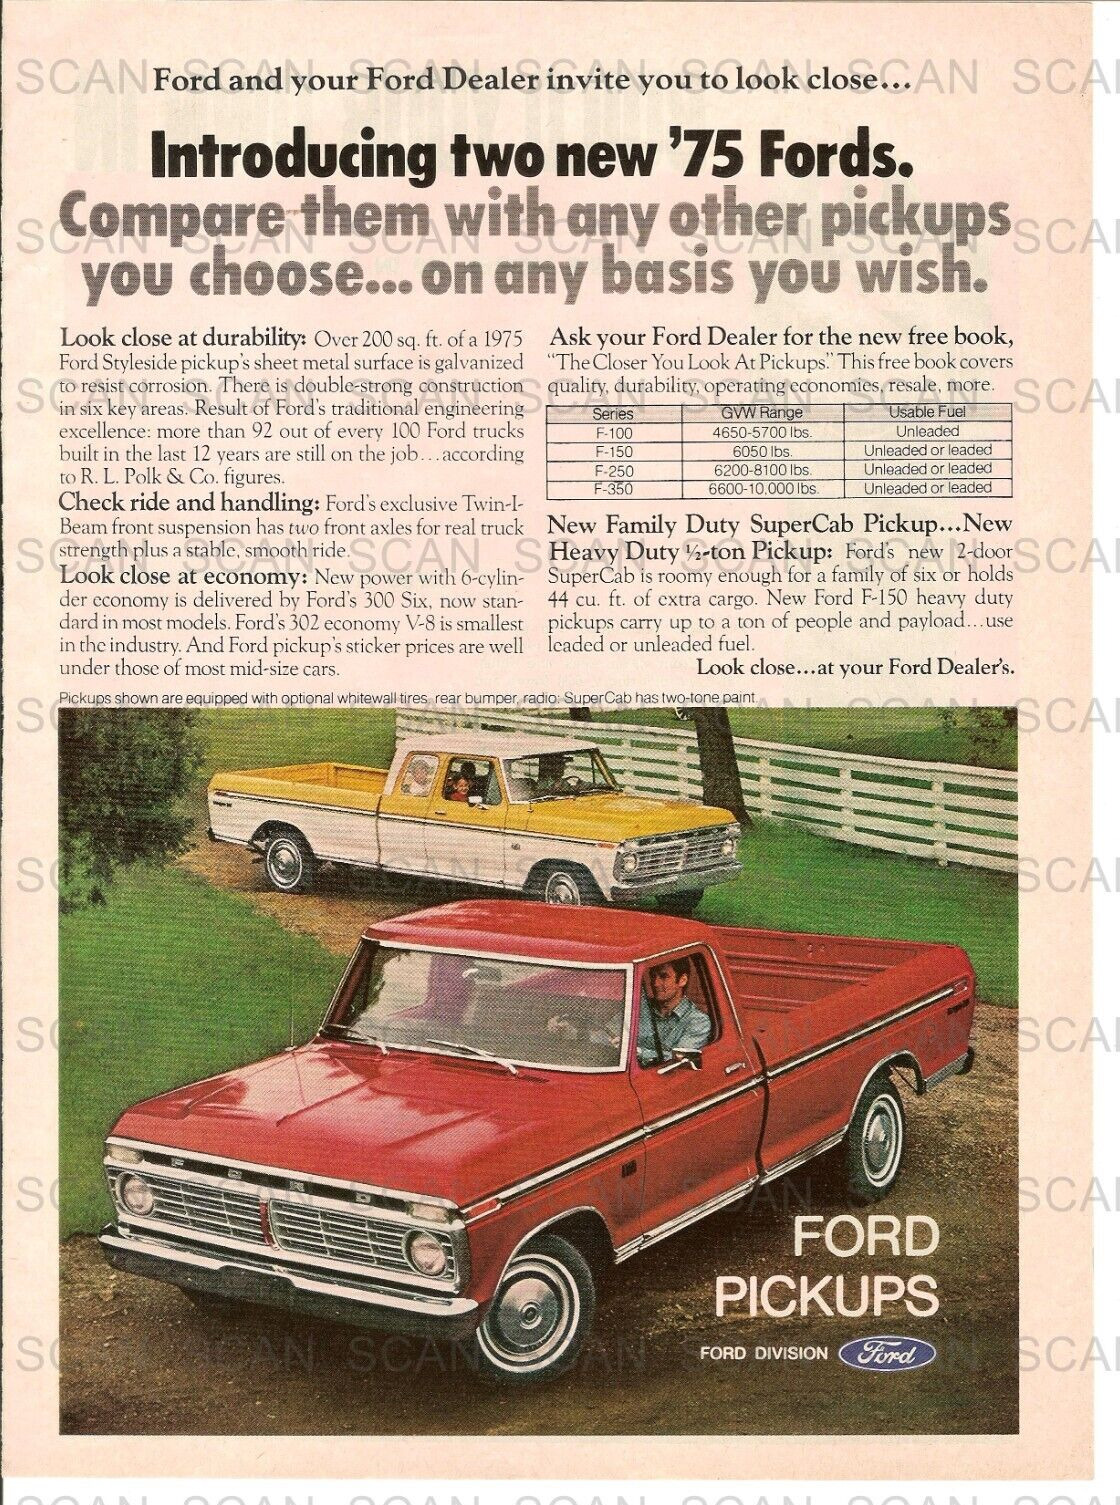 1975 Ford Pickups   1974 Vintage Magazine Ad    Ford Pickup Trucks